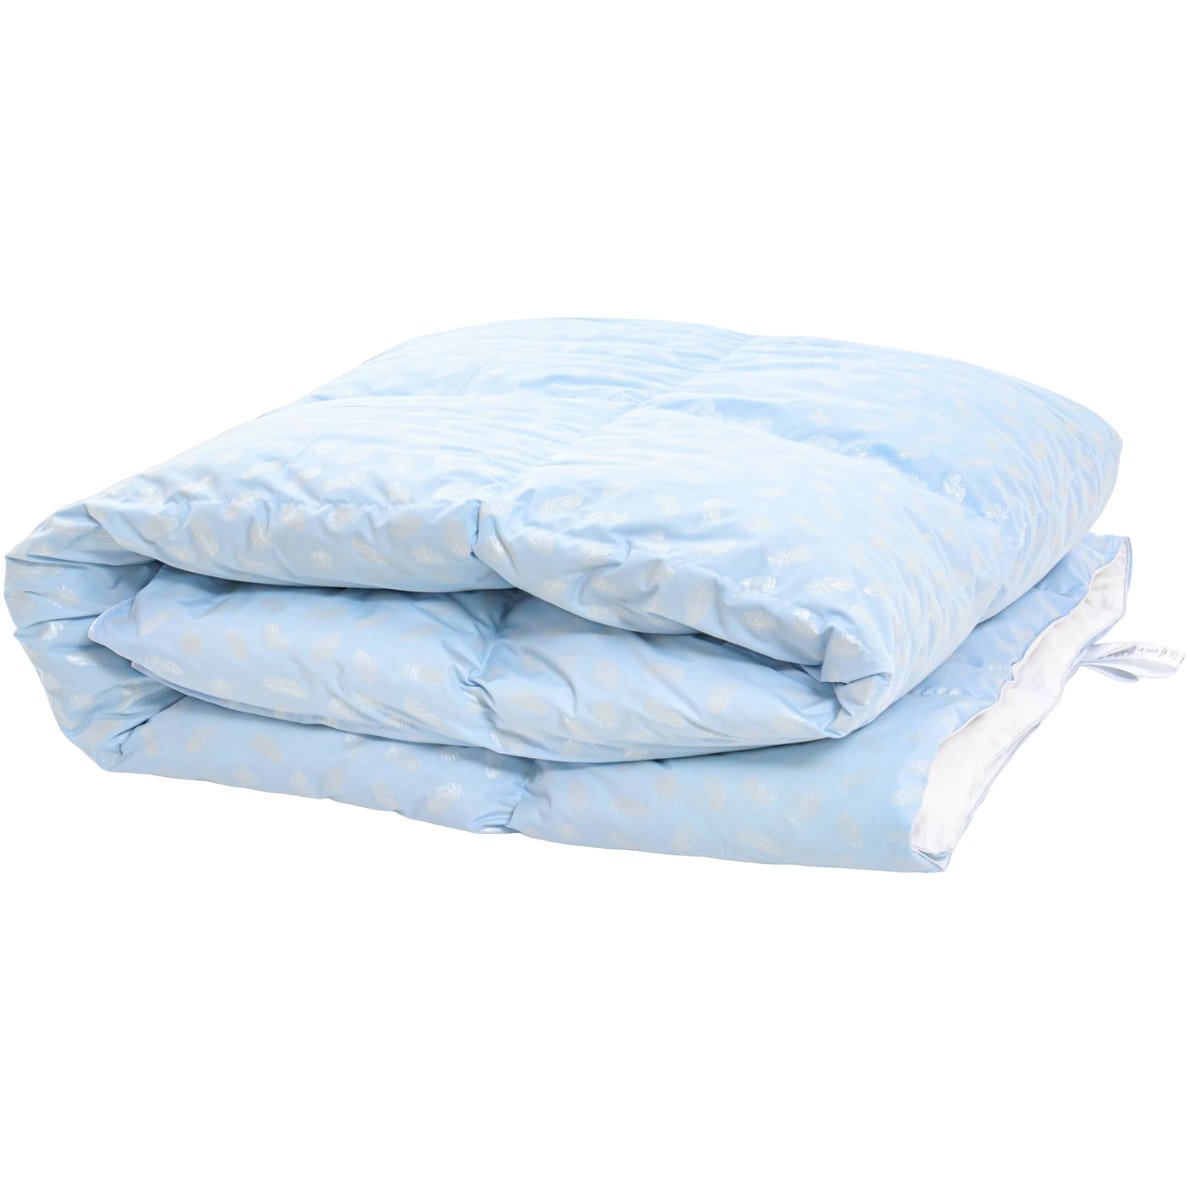 Одеяло пуховое MirSon Karmen №1840 Bio-Blue, 70% пух, евростандарт, 220x200, голубое (2200003013641) - фото 1